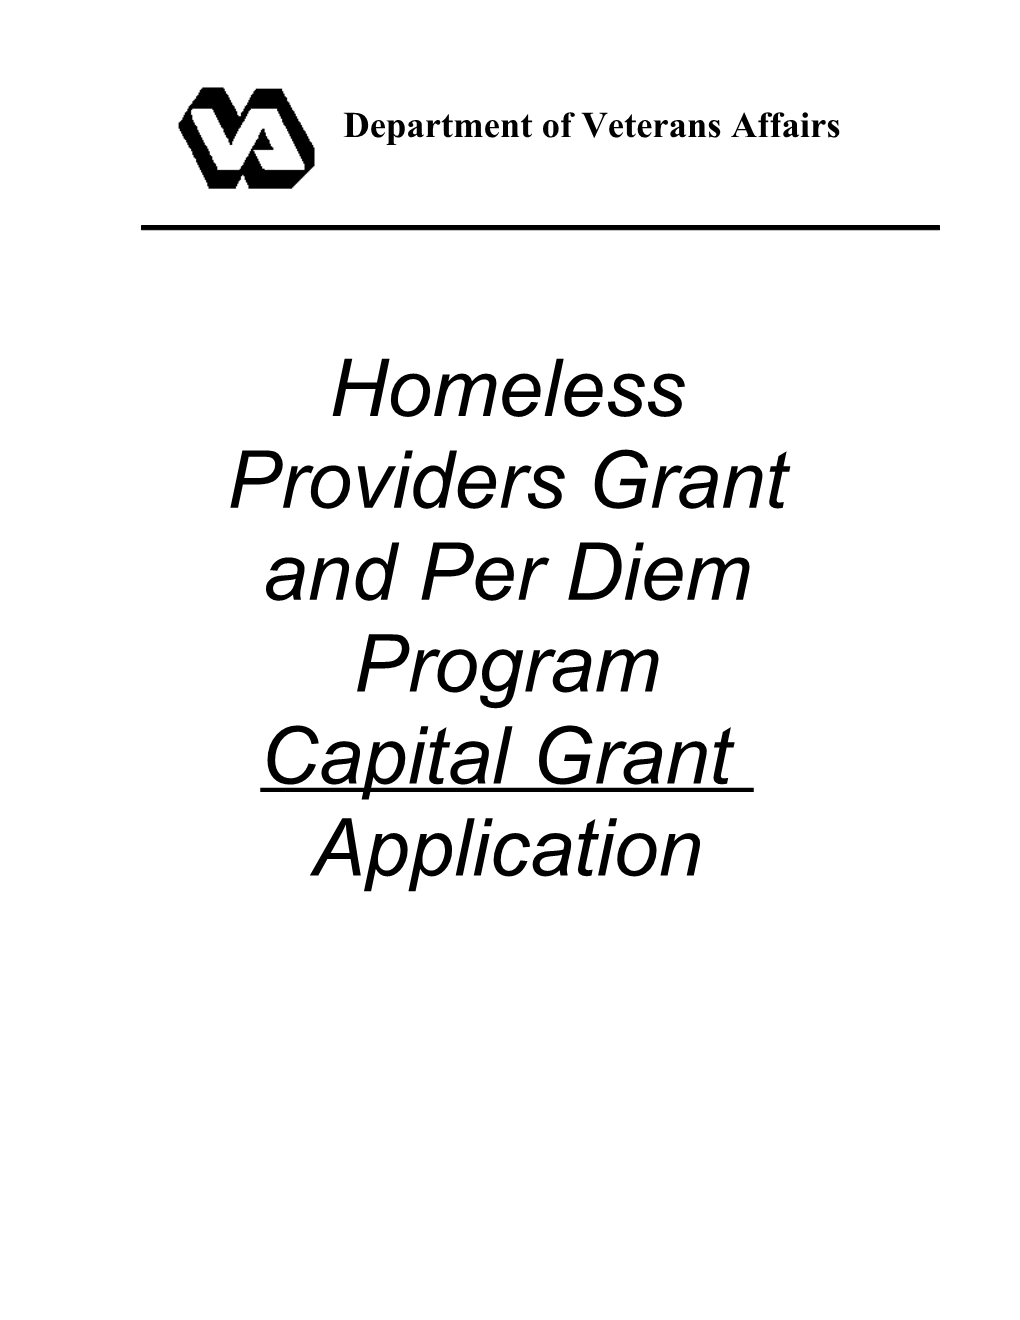 Homeless Provider Grant and Per Diem Program Application